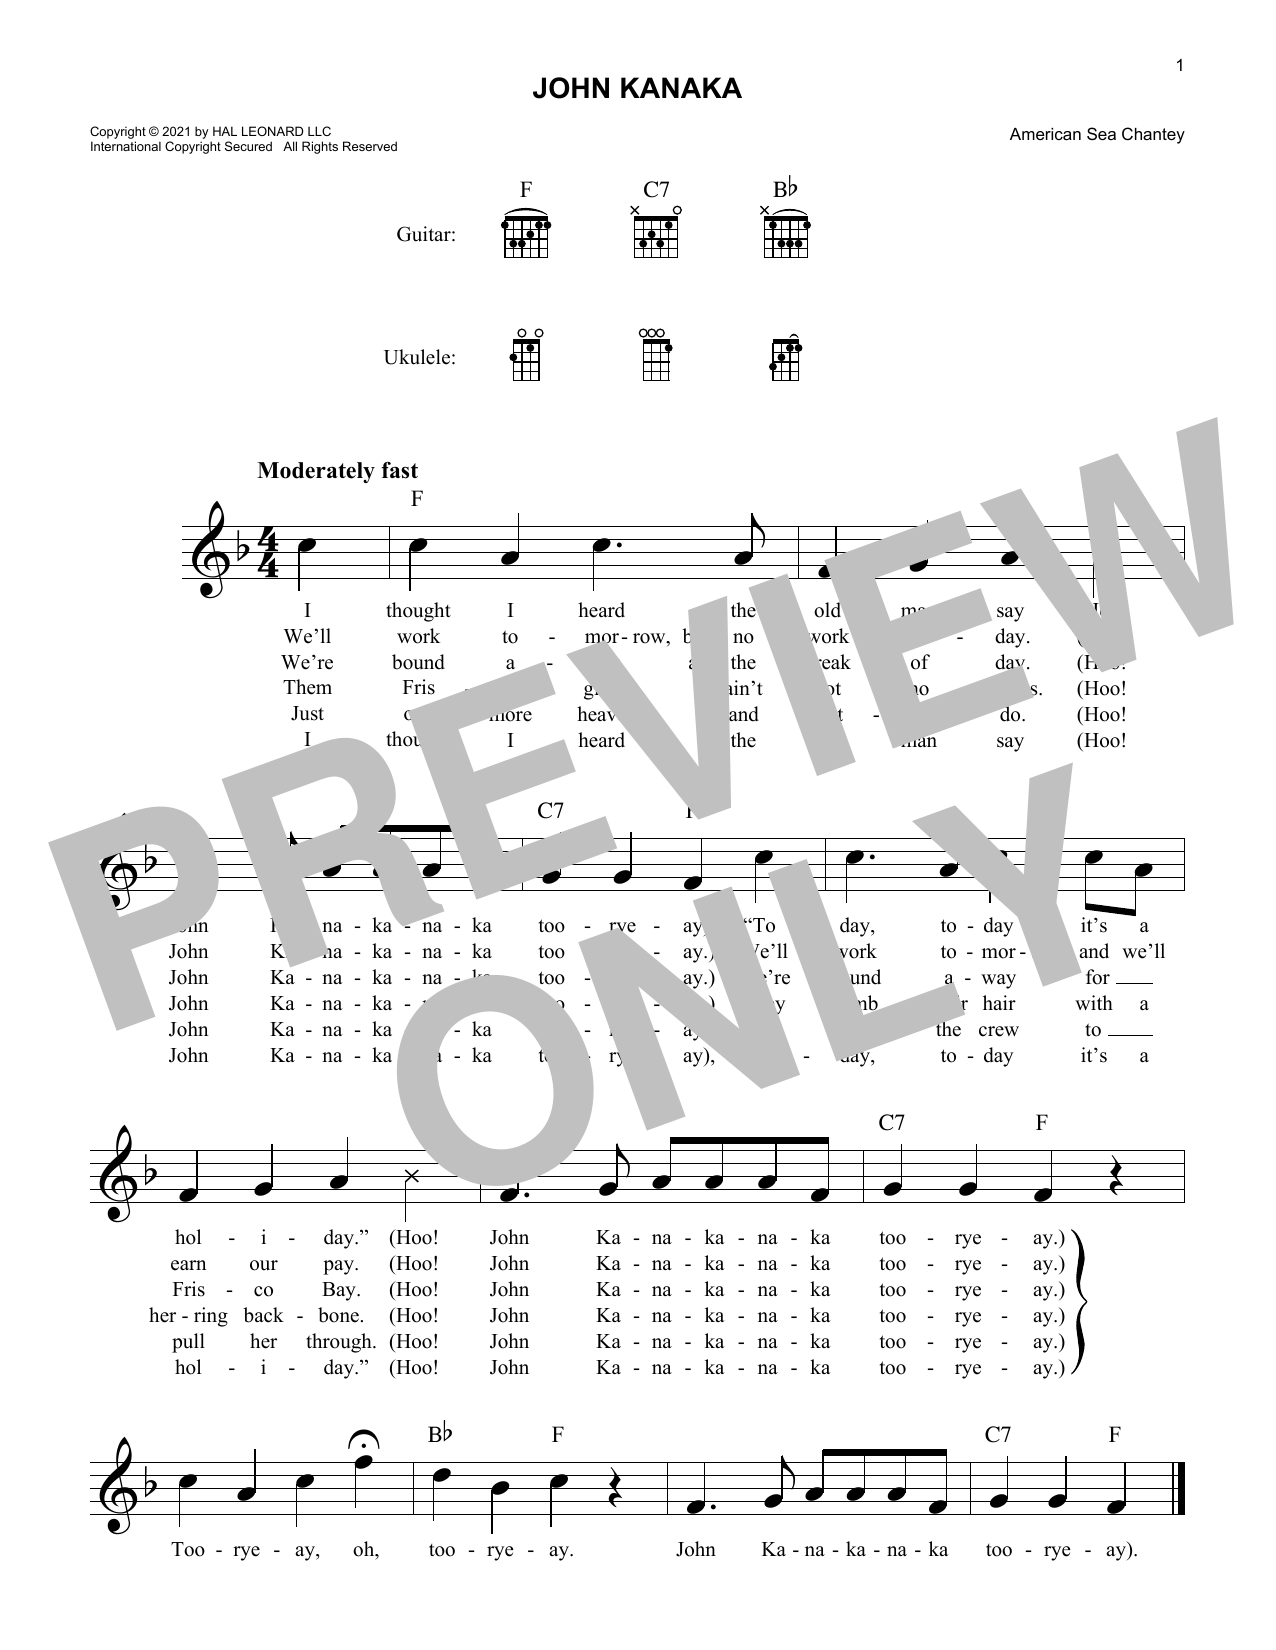 American Sea Chantey John Kanaka Sheet Music Notes & Chords for Lead Sheet / Fake Book - Download or Print PDF